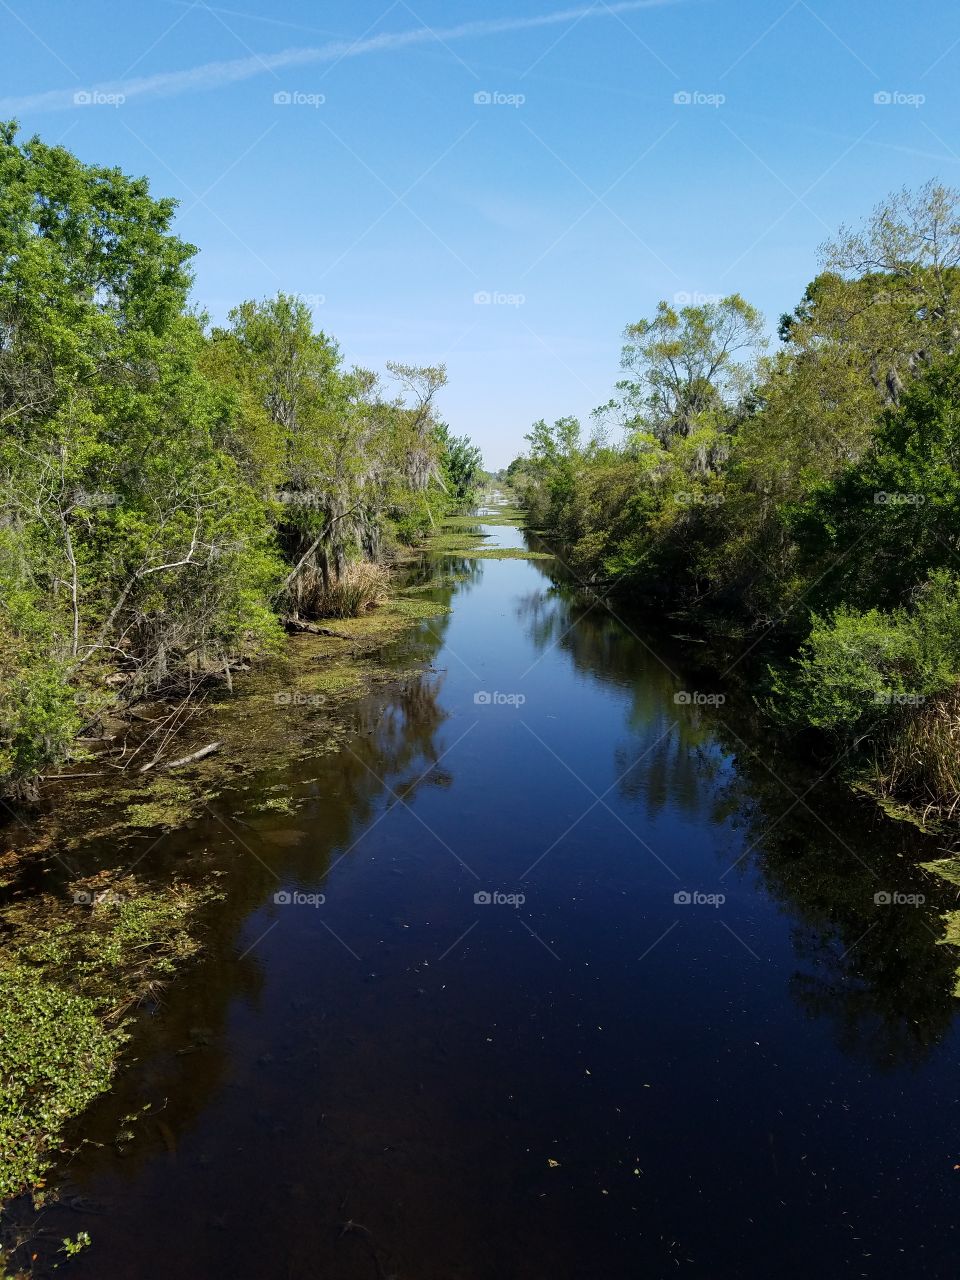 Swampland in Louisiana